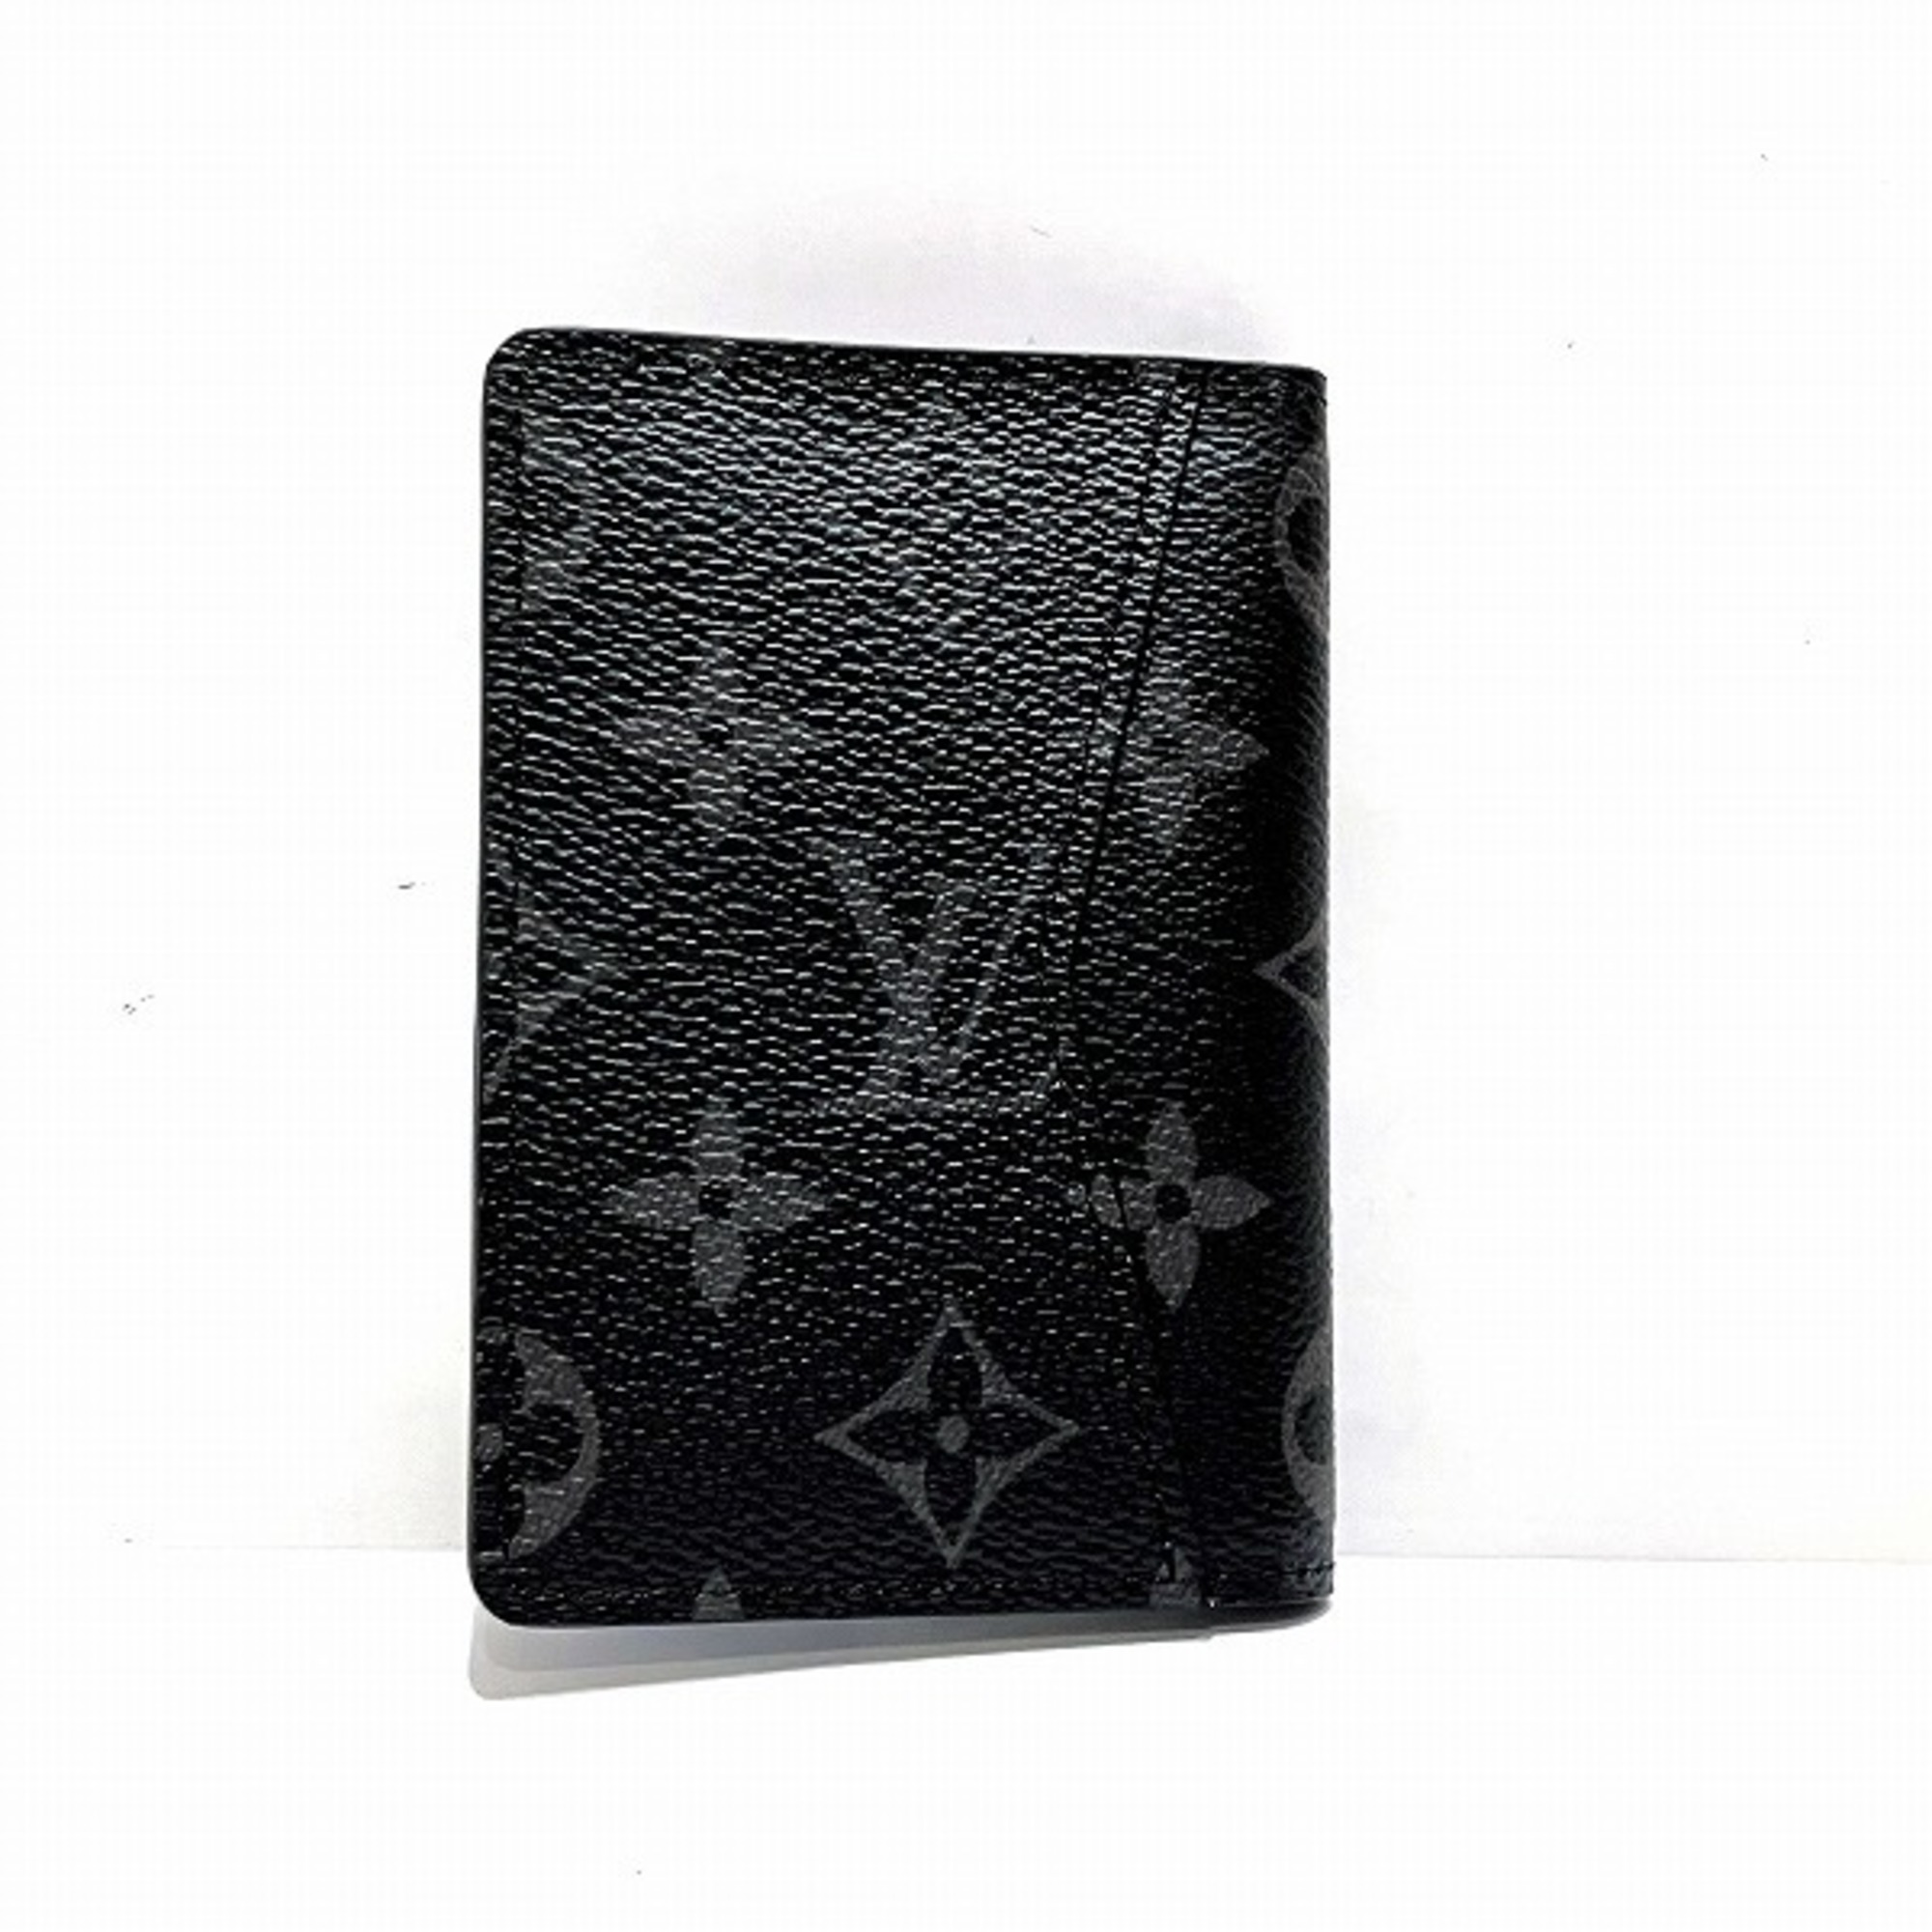 Louis Vuitton Monogram Organizer de Poche M80911 Card Case Business Holder Men's Women's Accessories